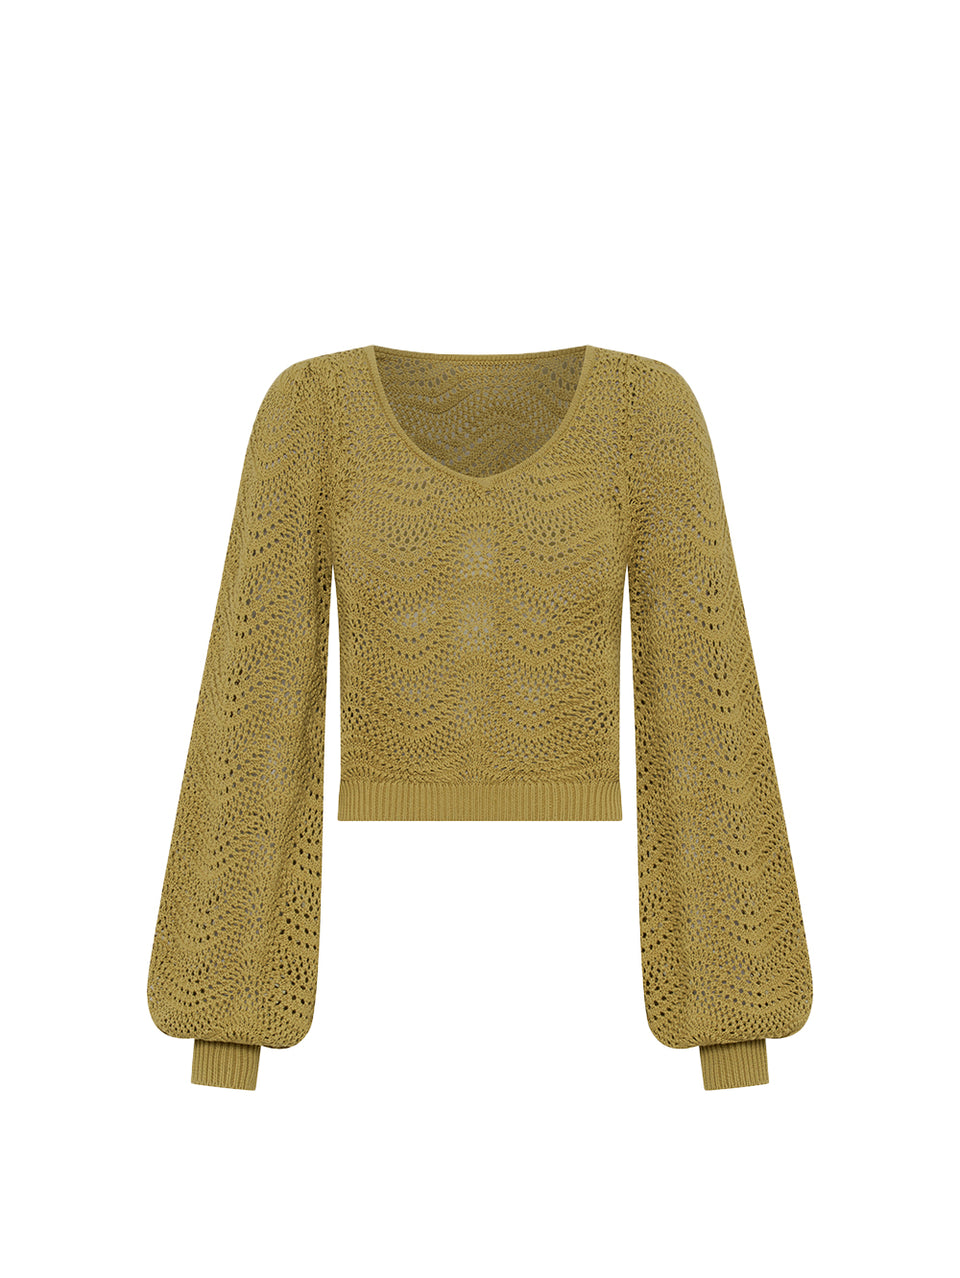 Mariana Knit Top Khaki KIVARI | Khaki knit top